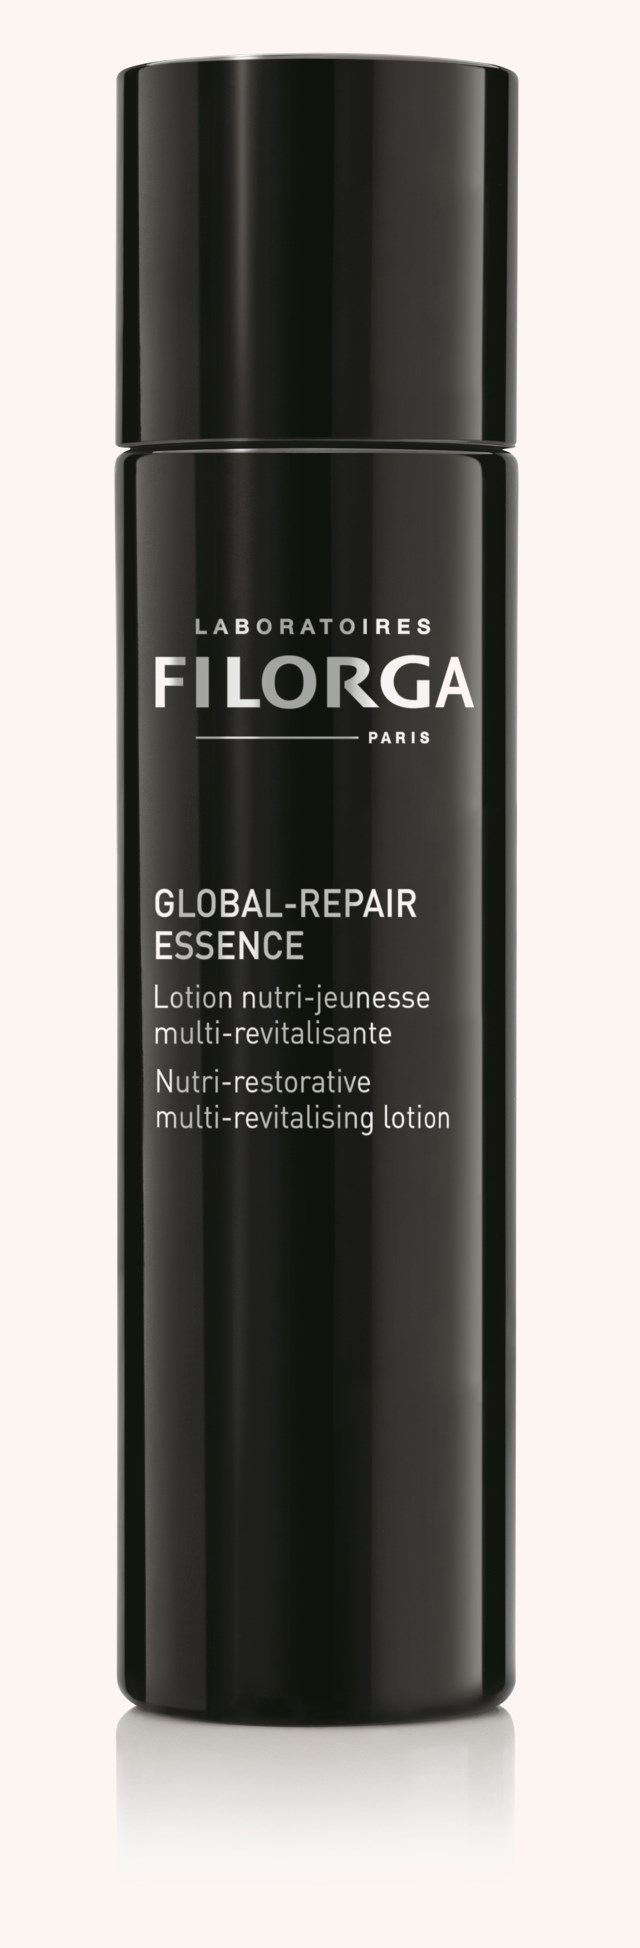 Global-Repair Essence 150 ml